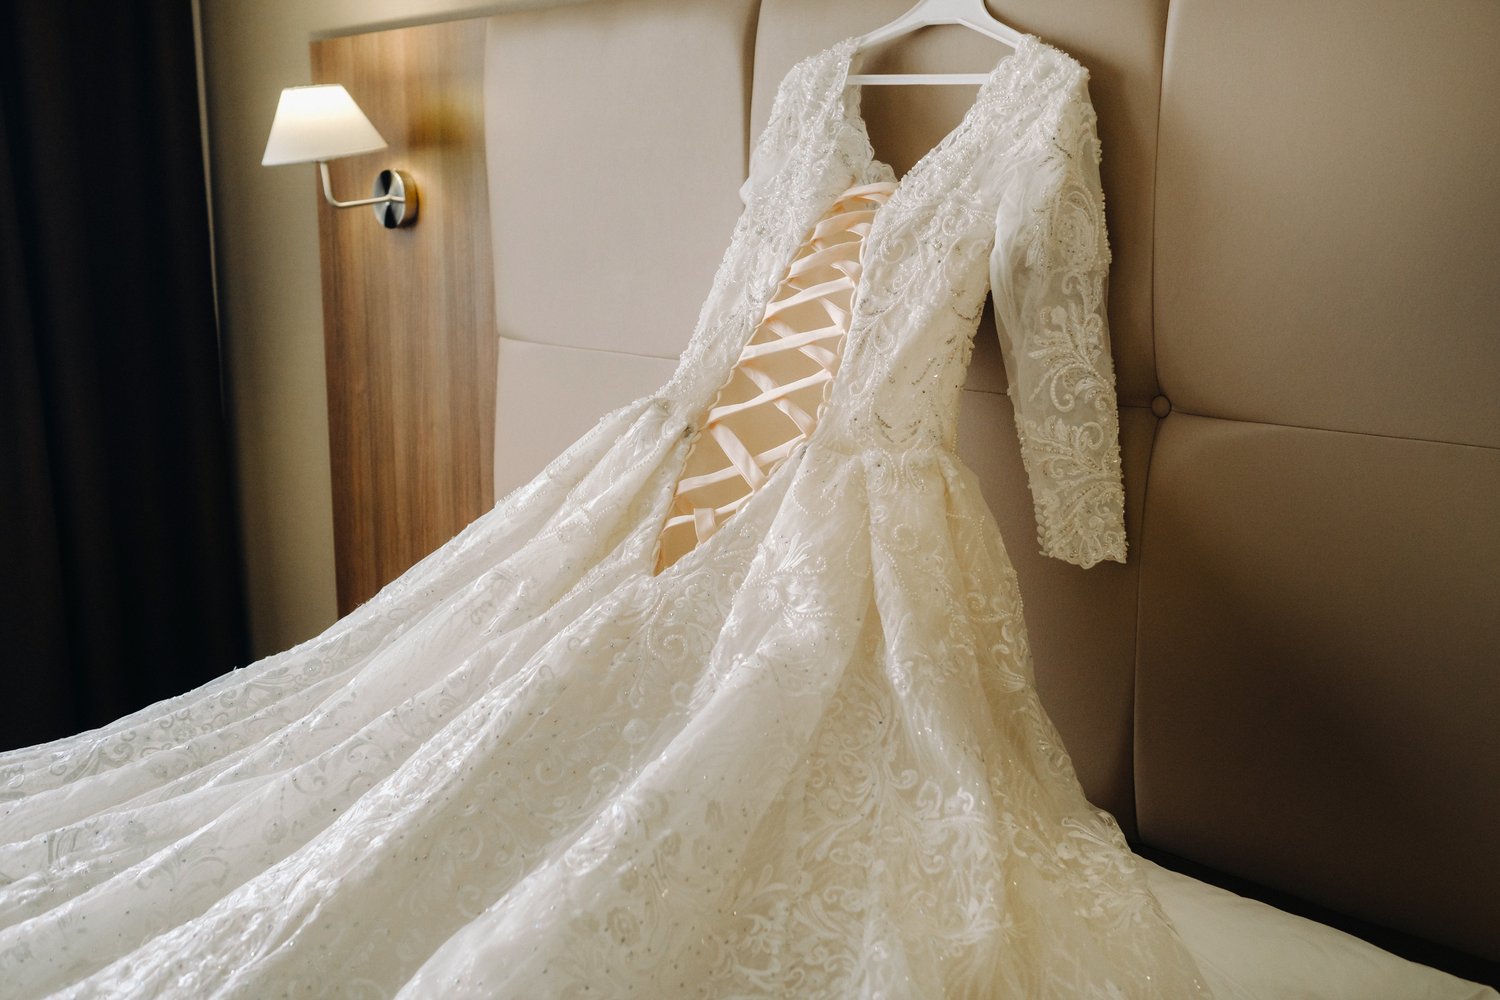 a-large-white-wedding-dress-on-a-hanger-is-lying-o-2023-11-27-04-53-26-utc